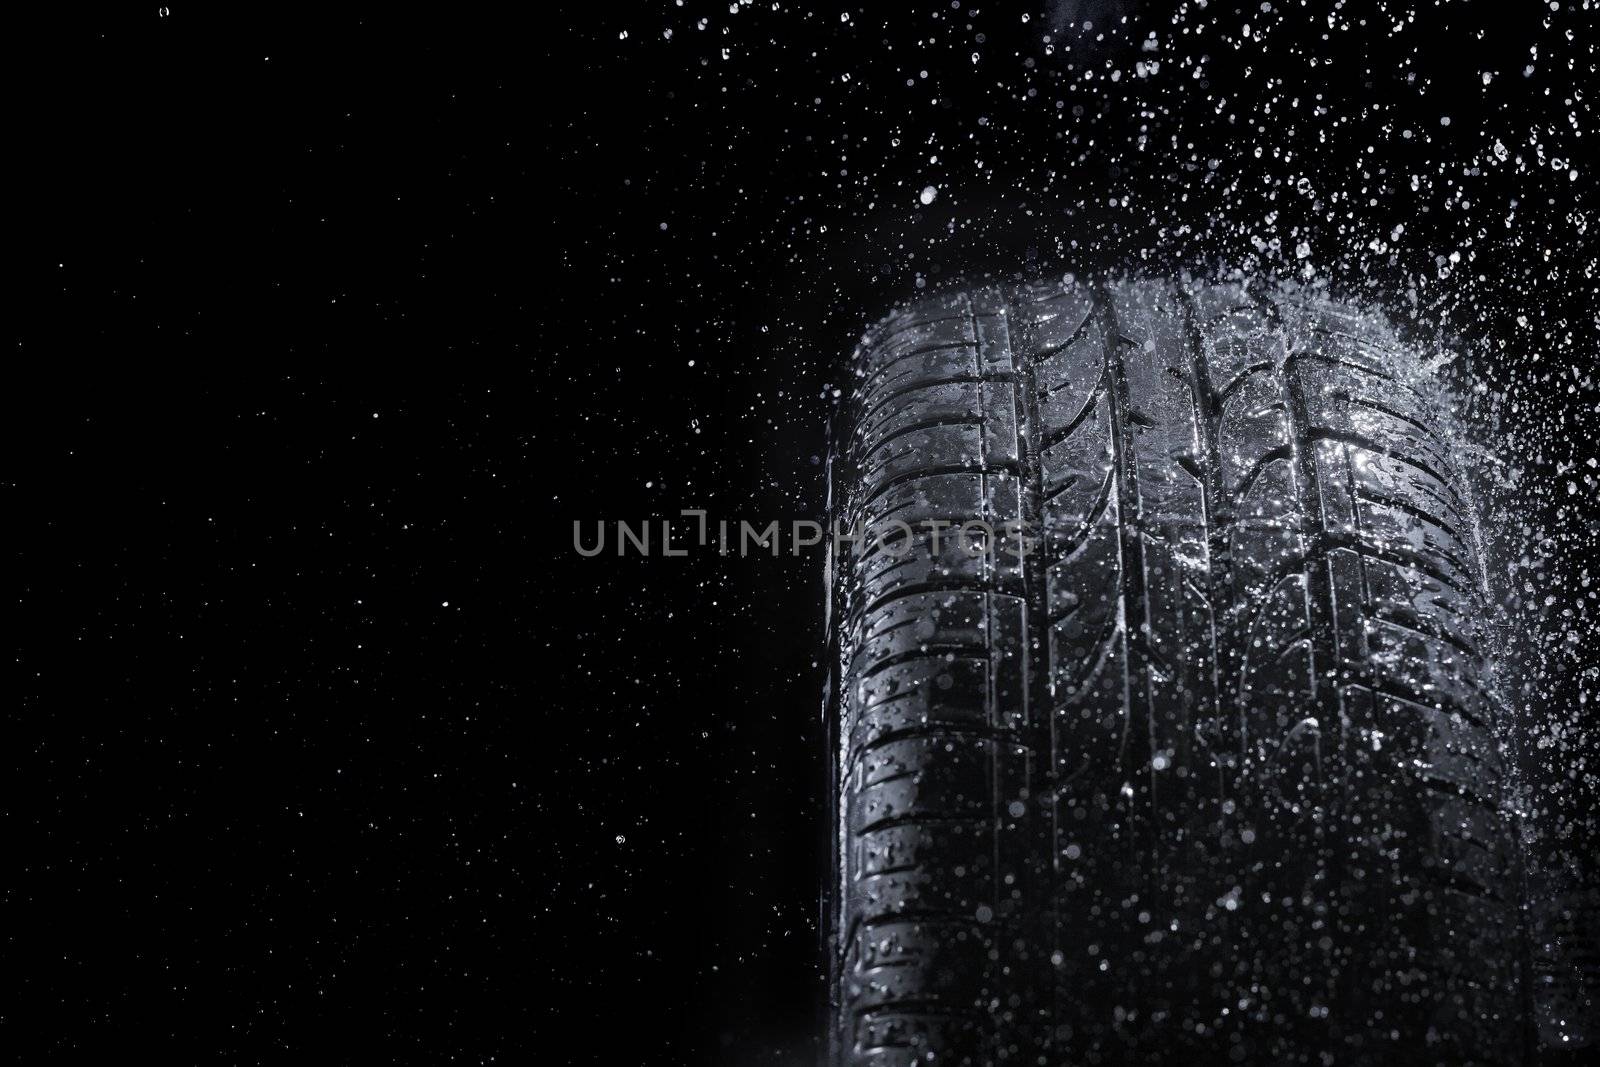 Rain Tire by Stocksnapper